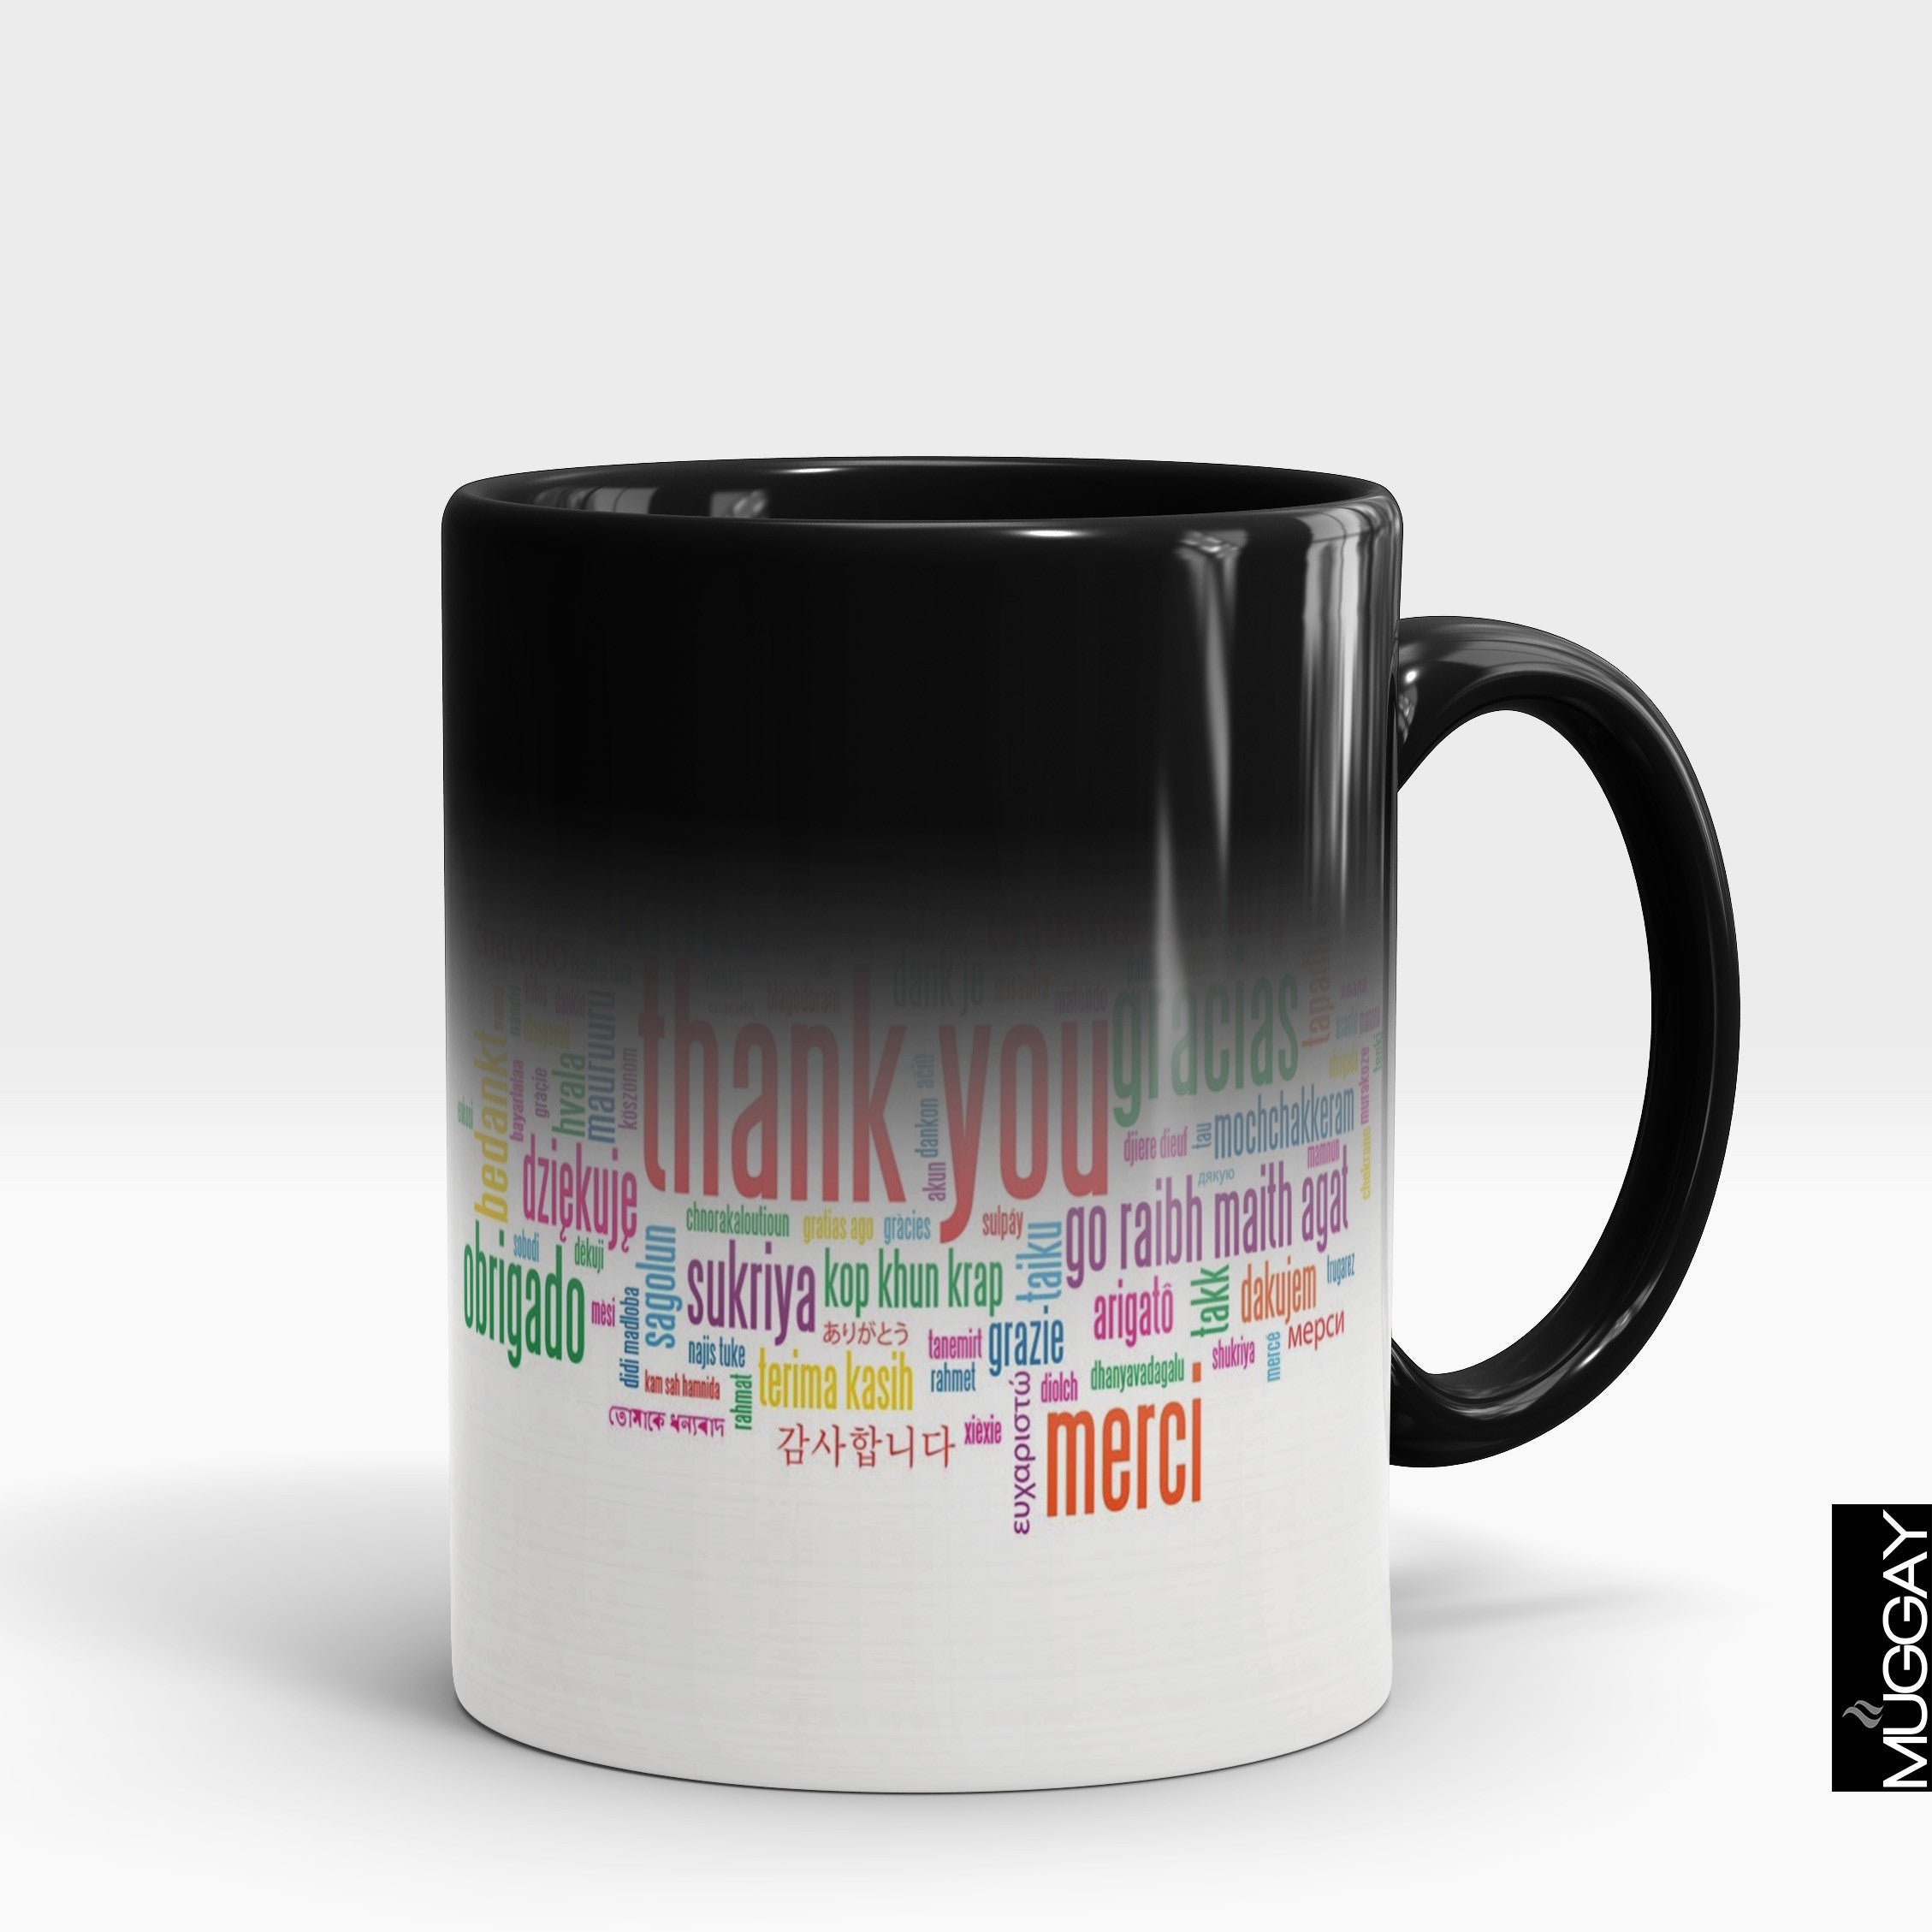 Thankyou mugs2